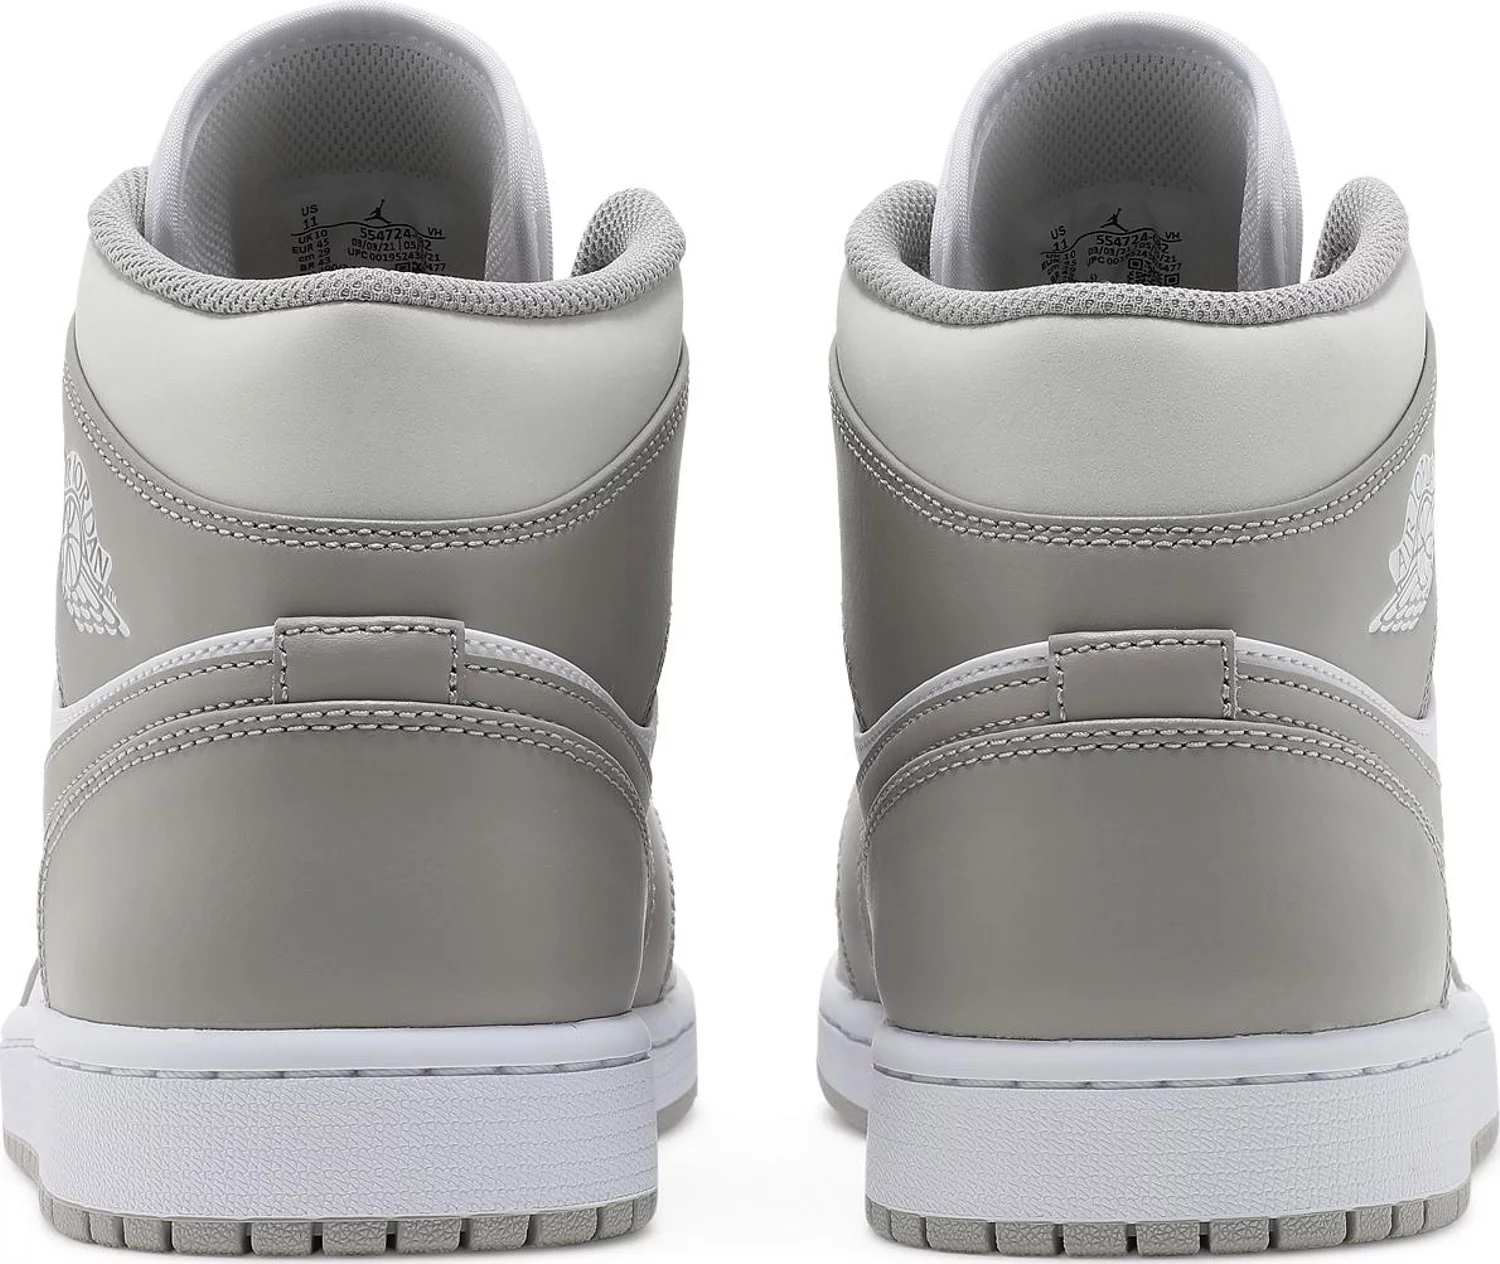 Giày Nike Air Jordan 1 Mid 'College Grey' 554724-082